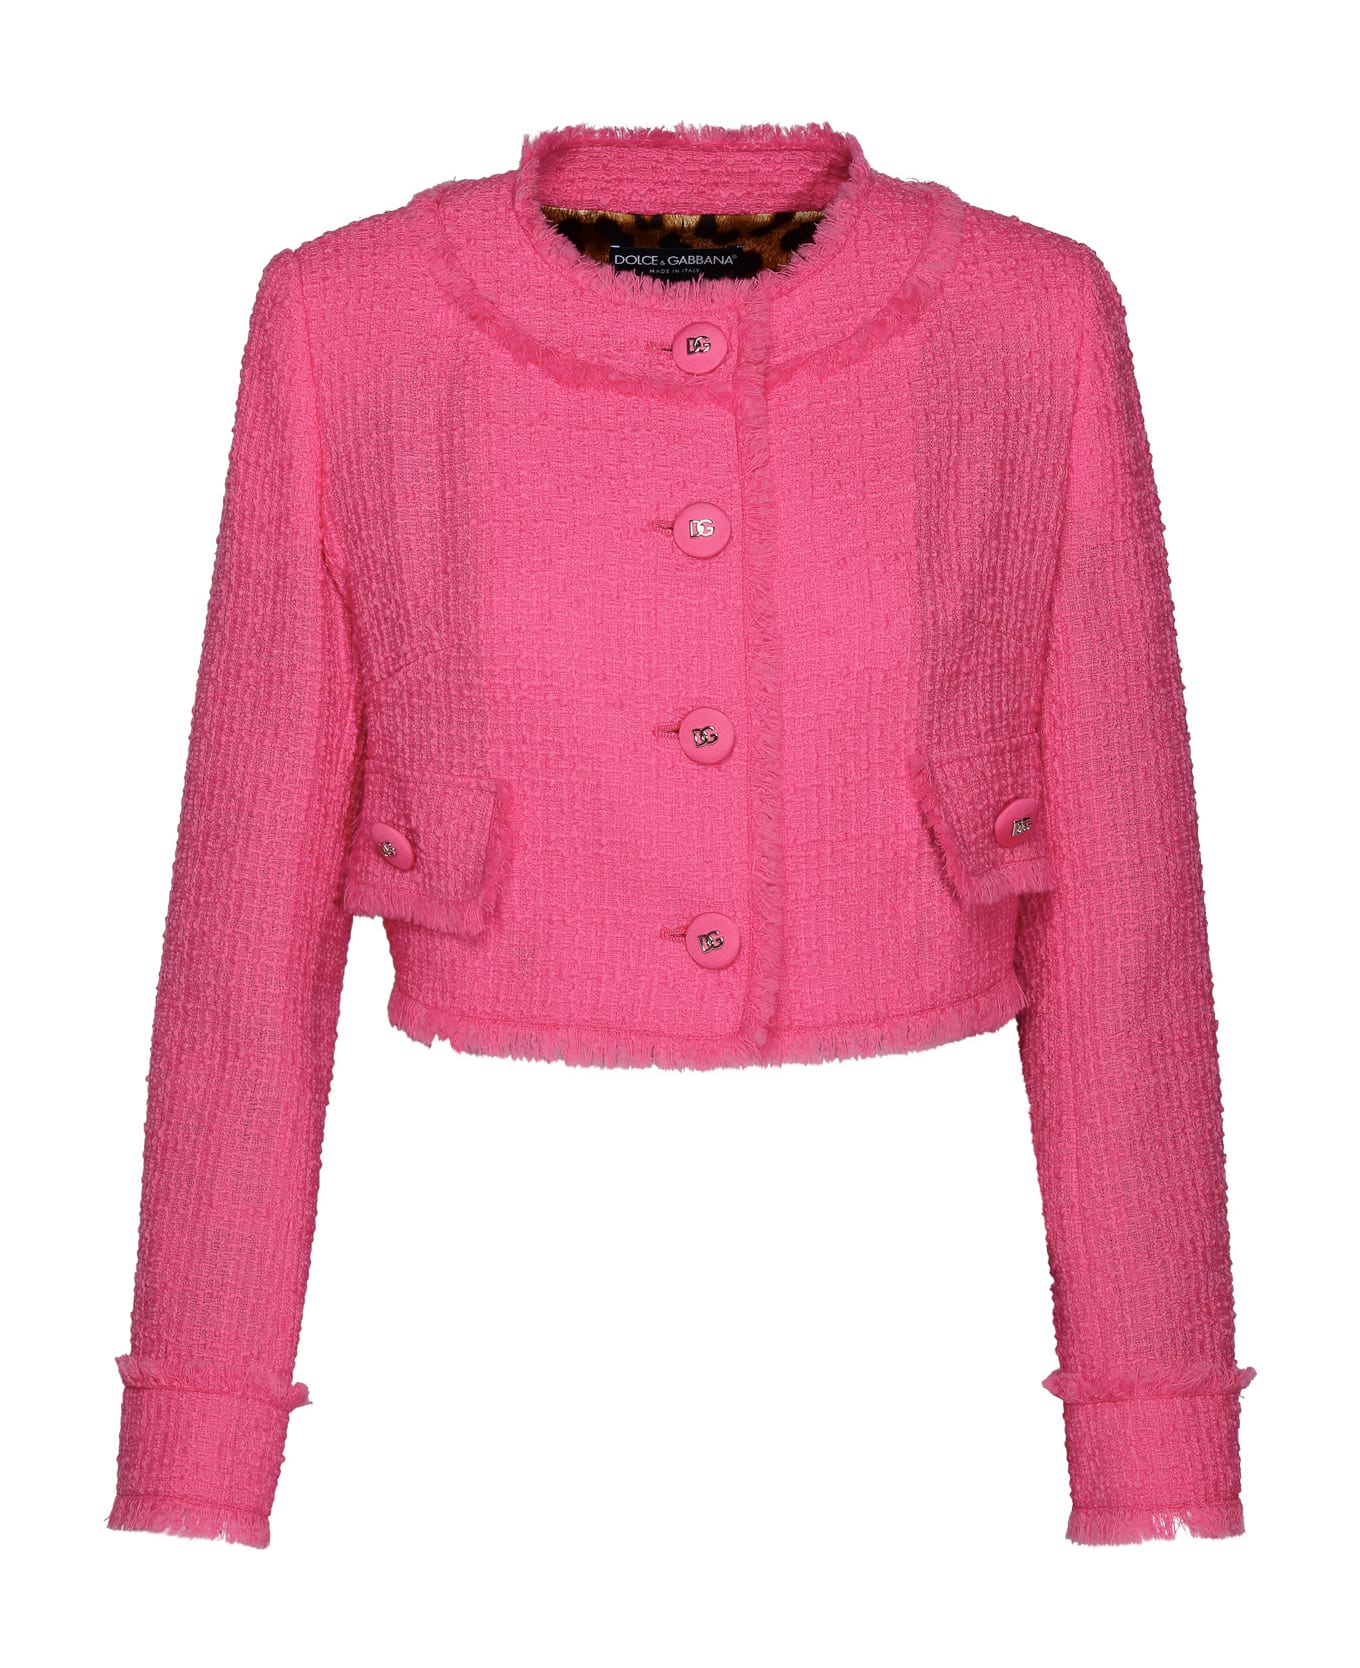 Dolce & Gabbana Tweed Jacket - Pink